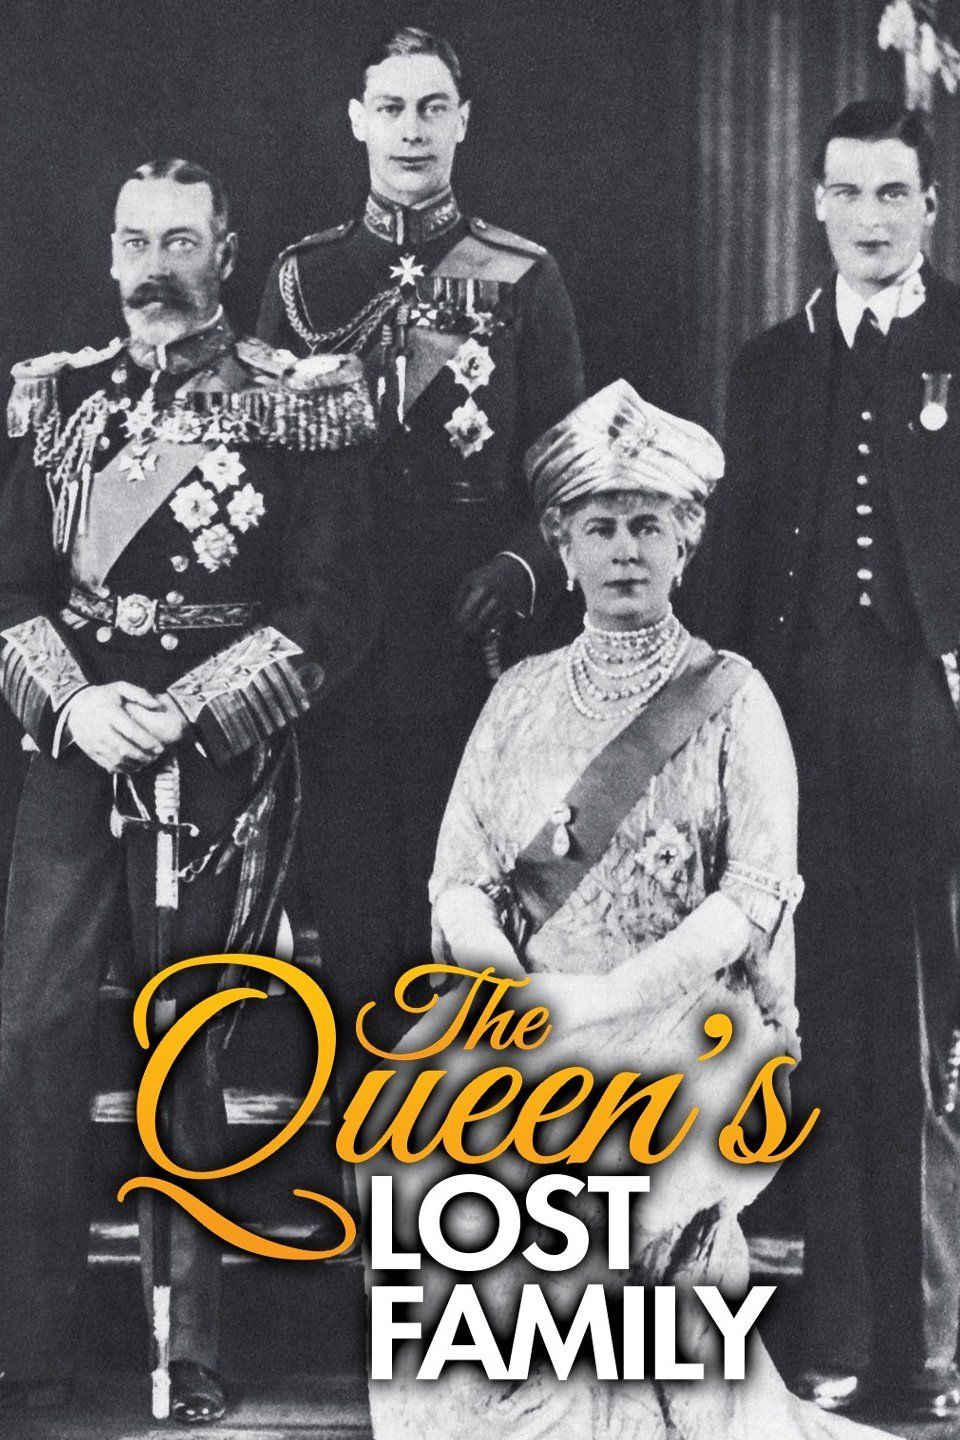 The Queen's Lost Family ne zaman